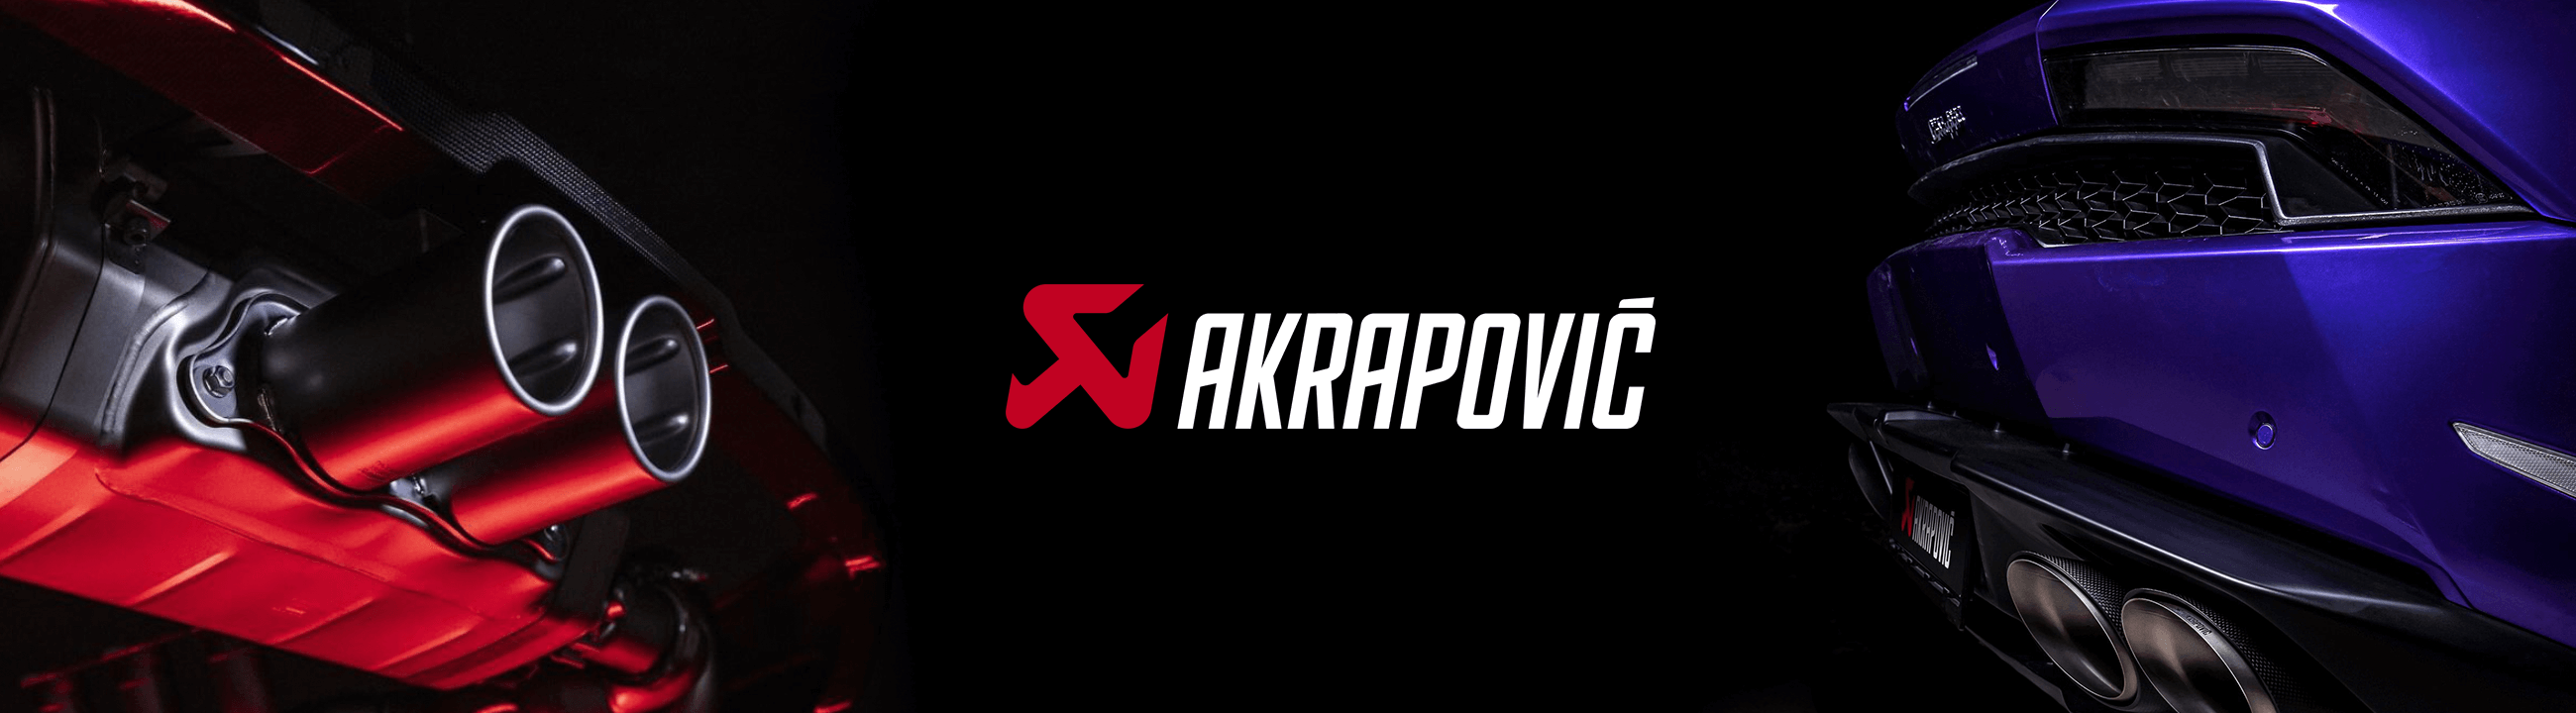 Akrapovic product collection ATOMIC-SHOP UAE